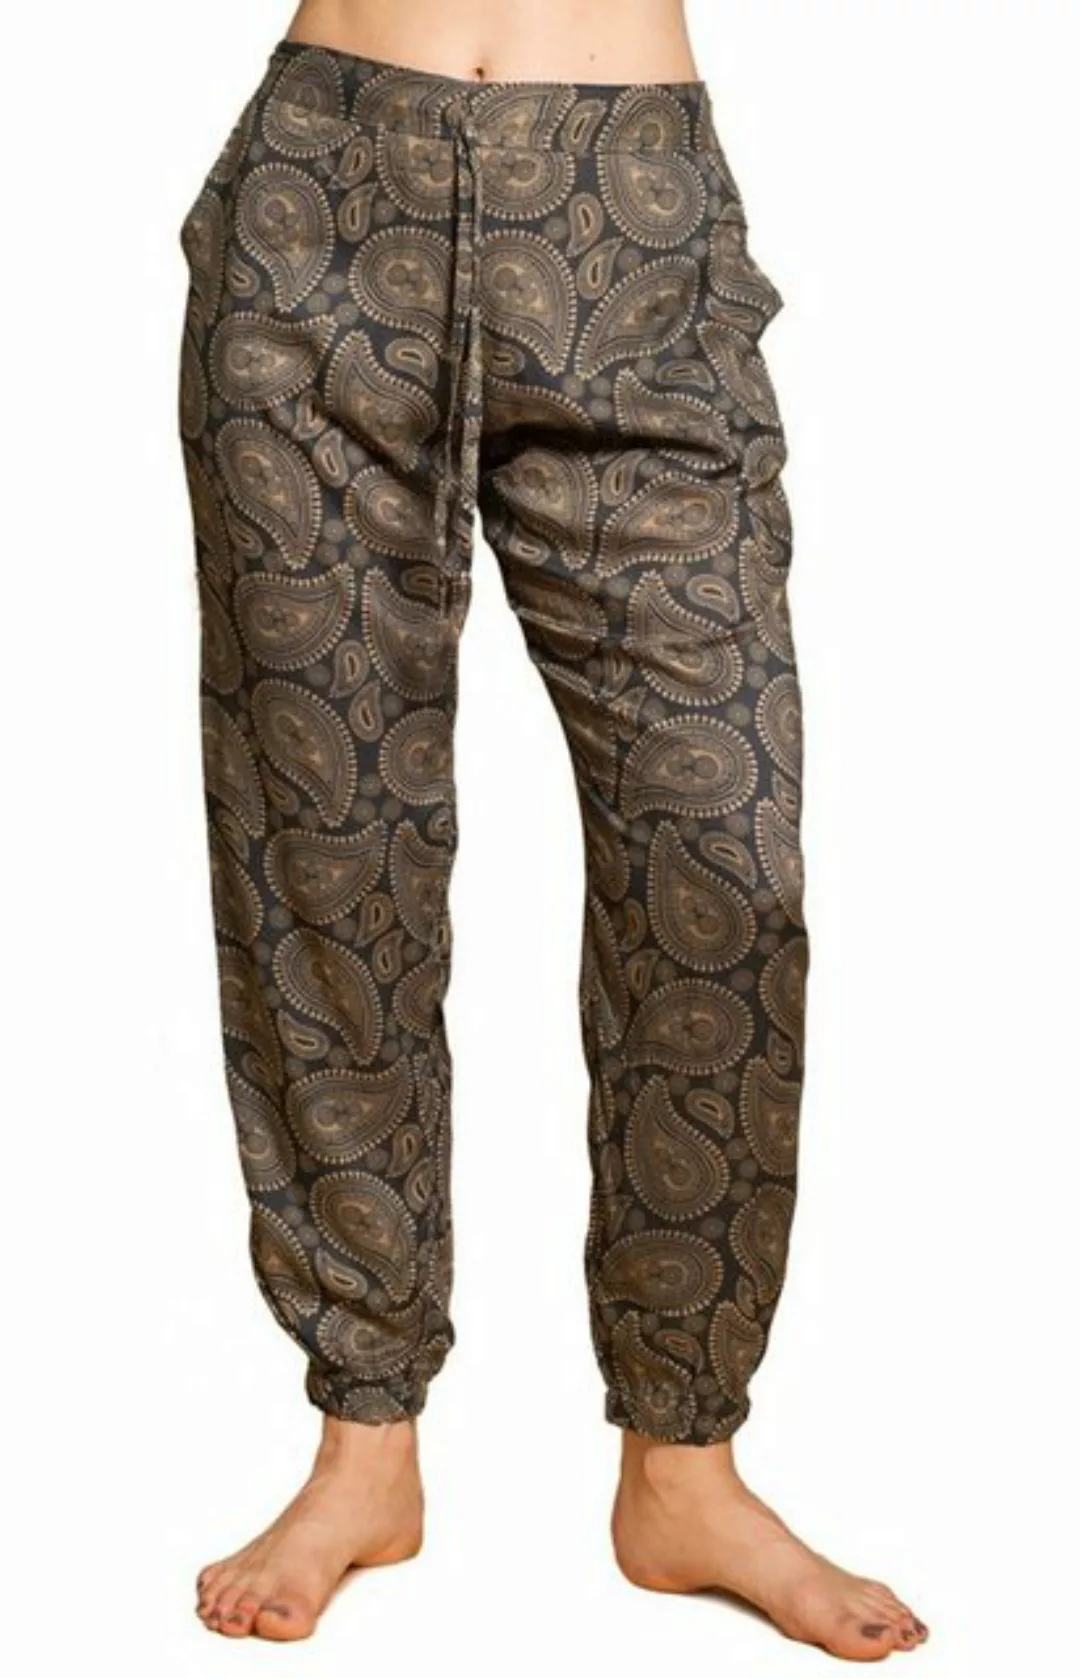 PANASIAM Relaxhose Relaxed pants geometric style aus 100 %Baumwolle bequeme günstig online kaufen